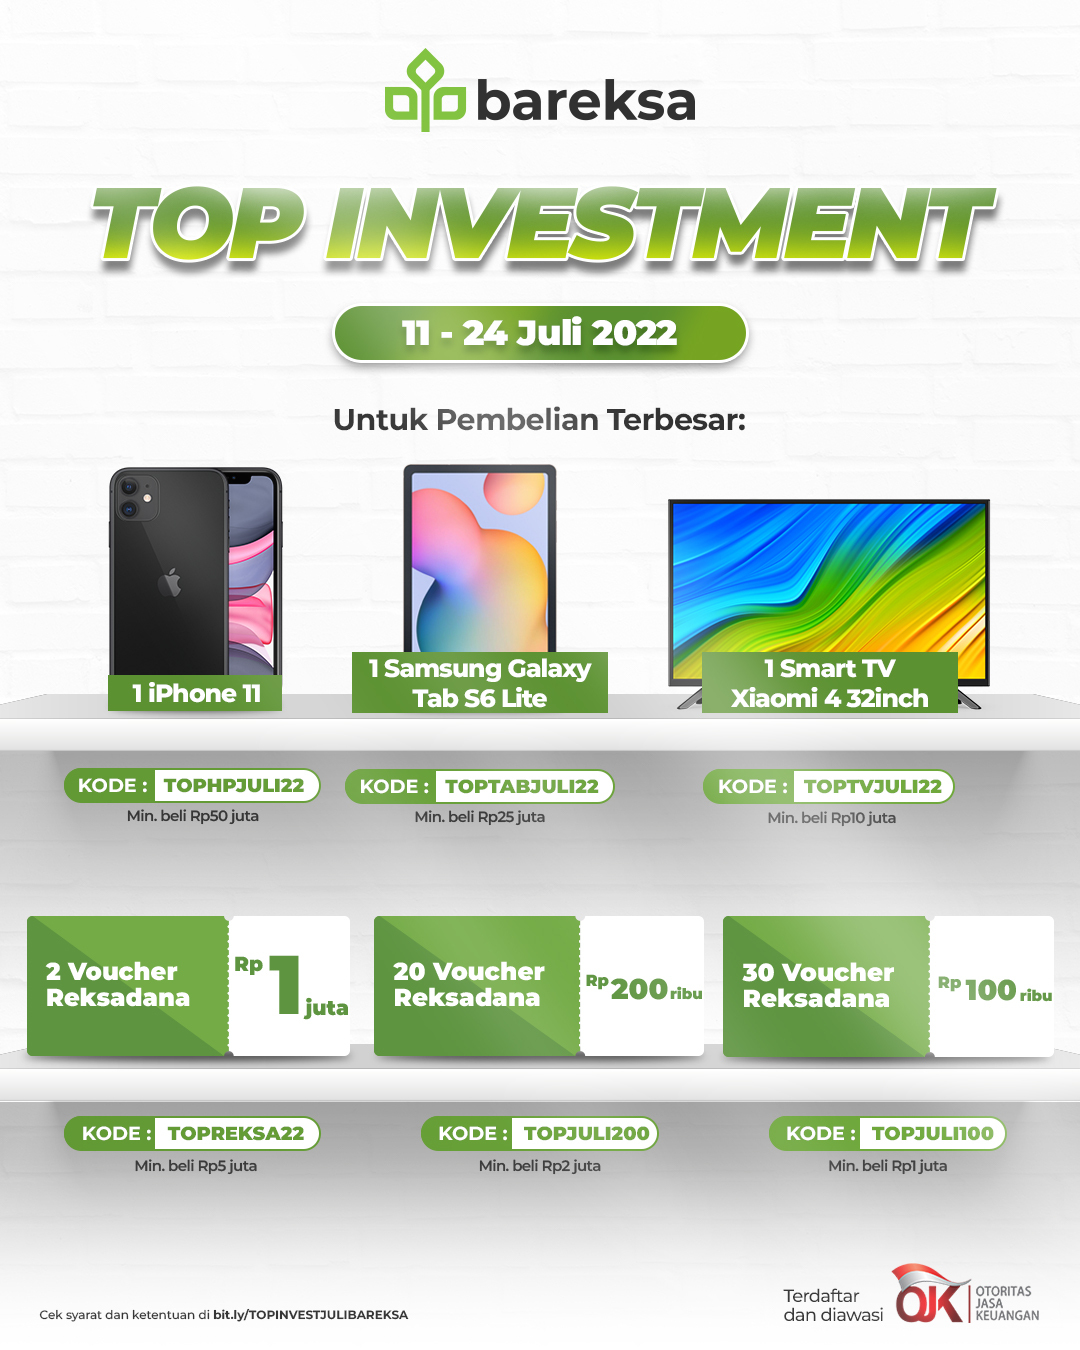 Selamat! Ini Pemenang Promo Top Investment Juli 2022 Berhadiah iPhone hingga Reksadana